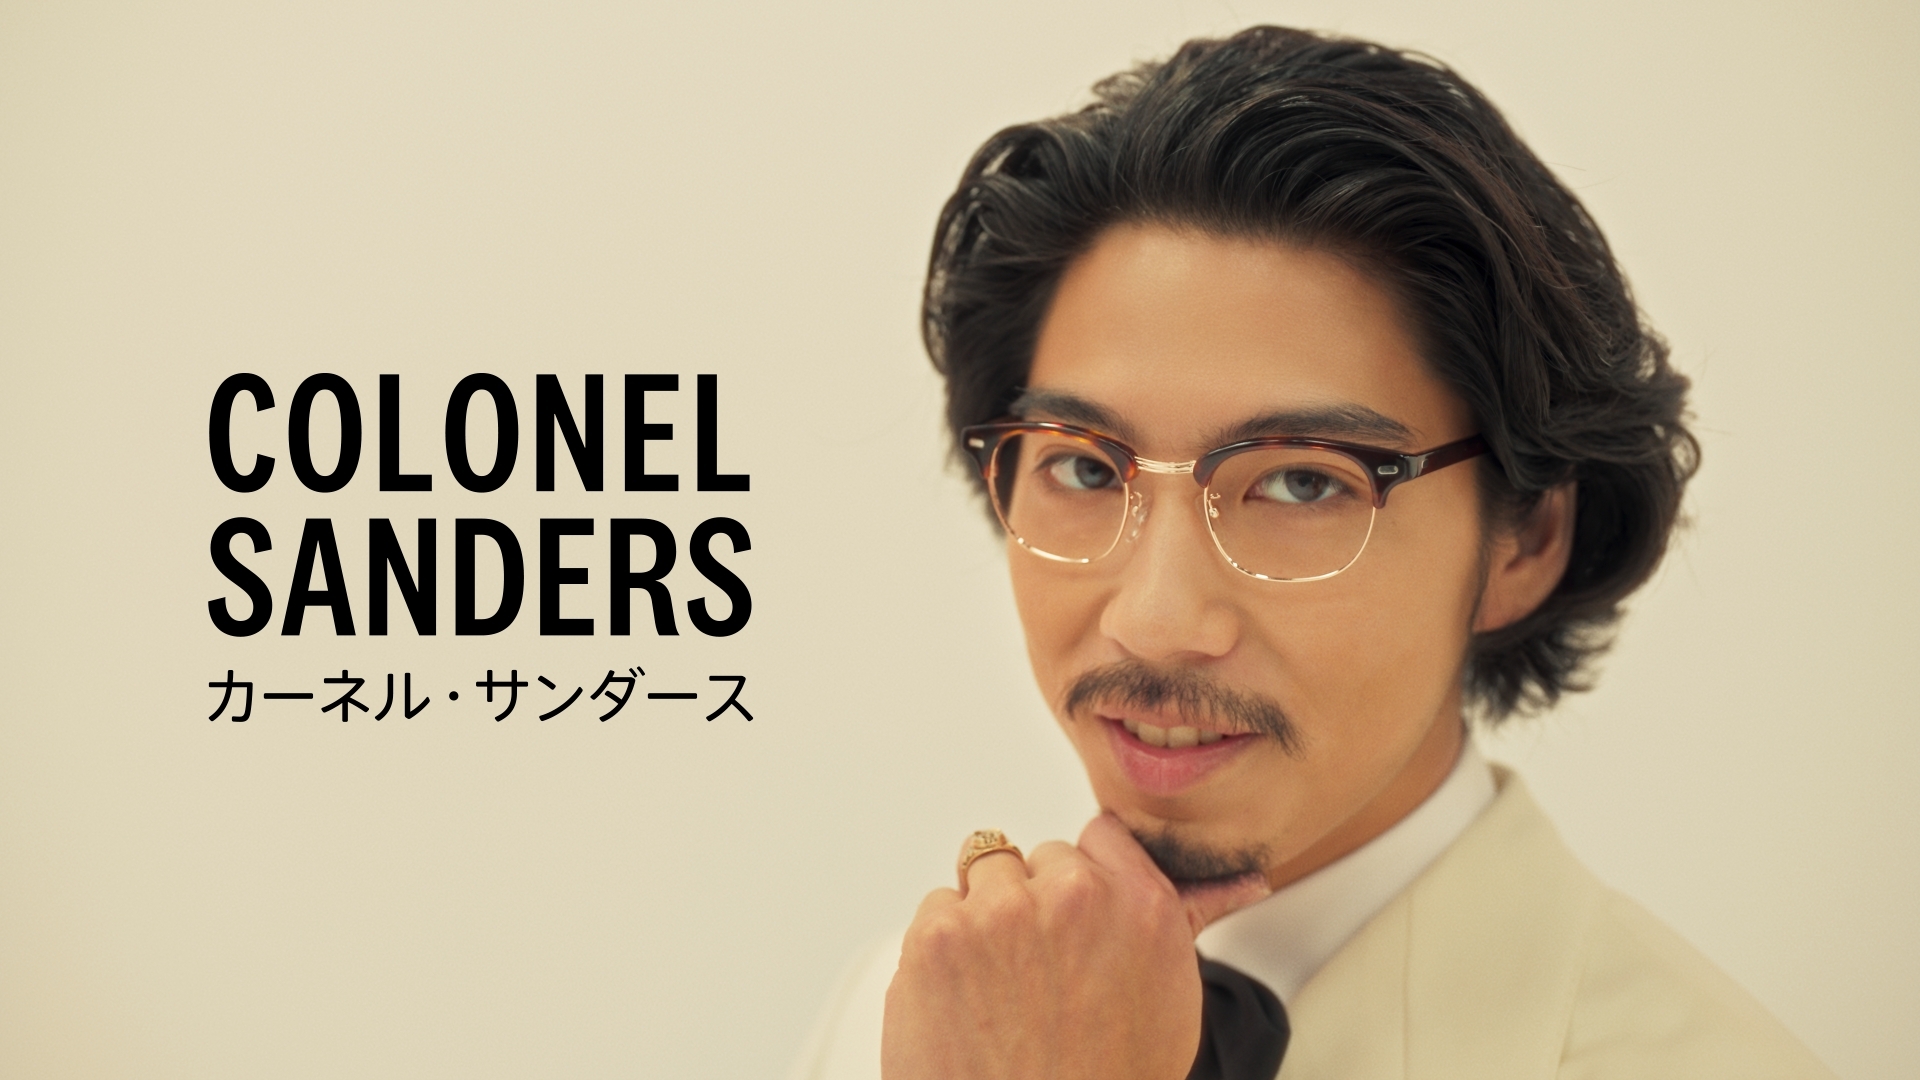 World Meet Kfc’s New Japanese Colonel Sanders